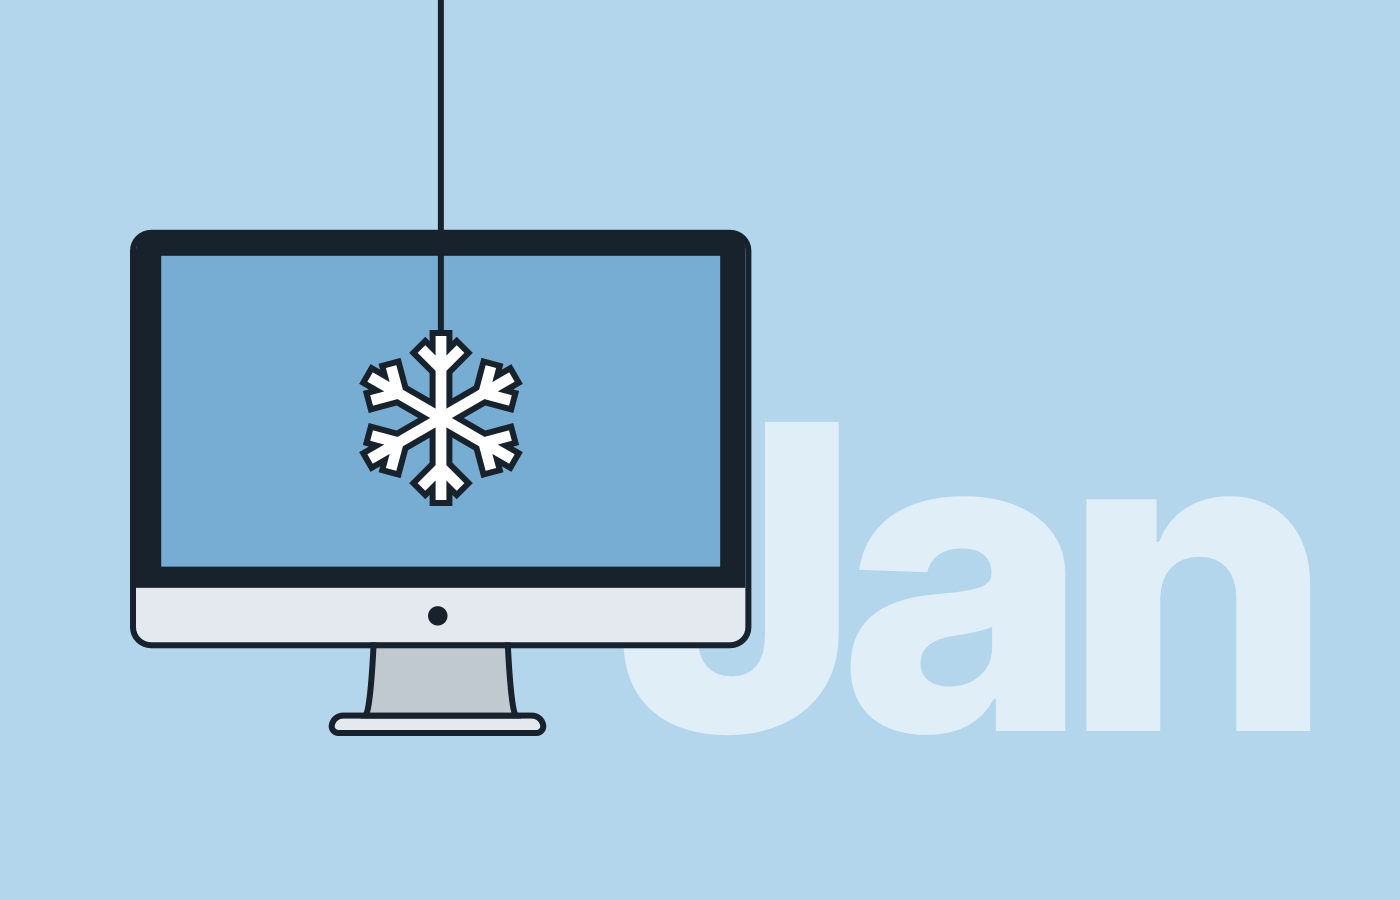 january - single snowflake